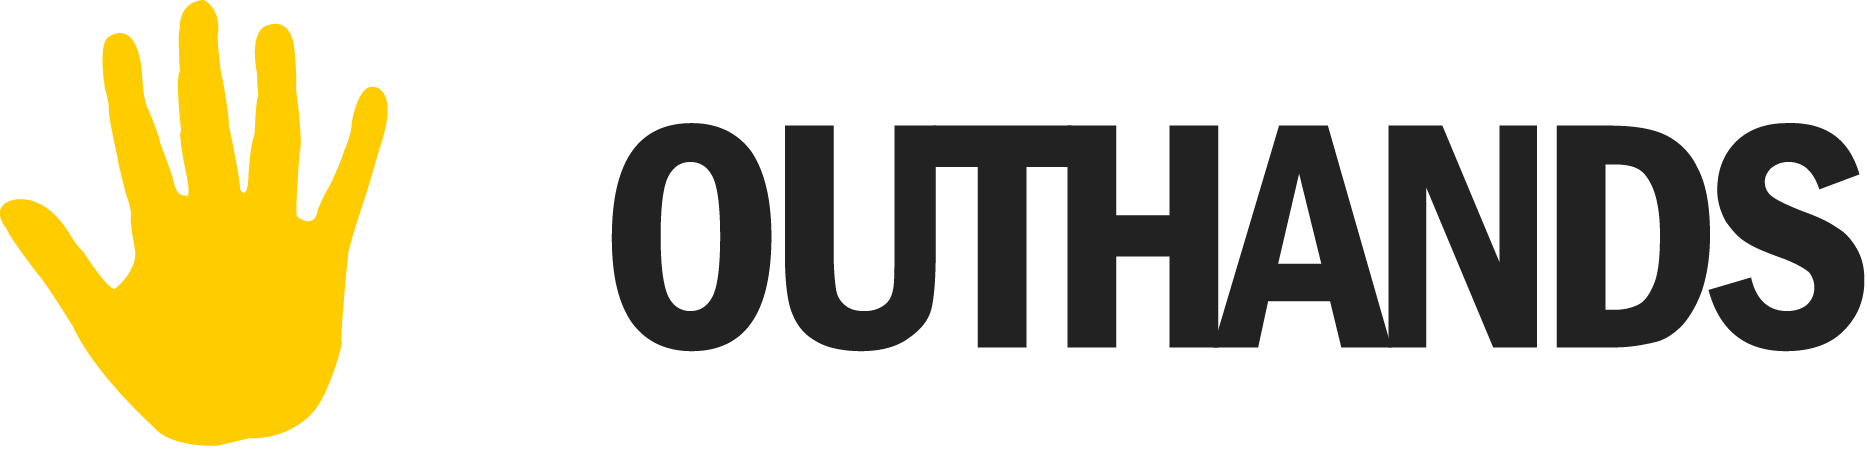 Logo van Outhands Internet & Media